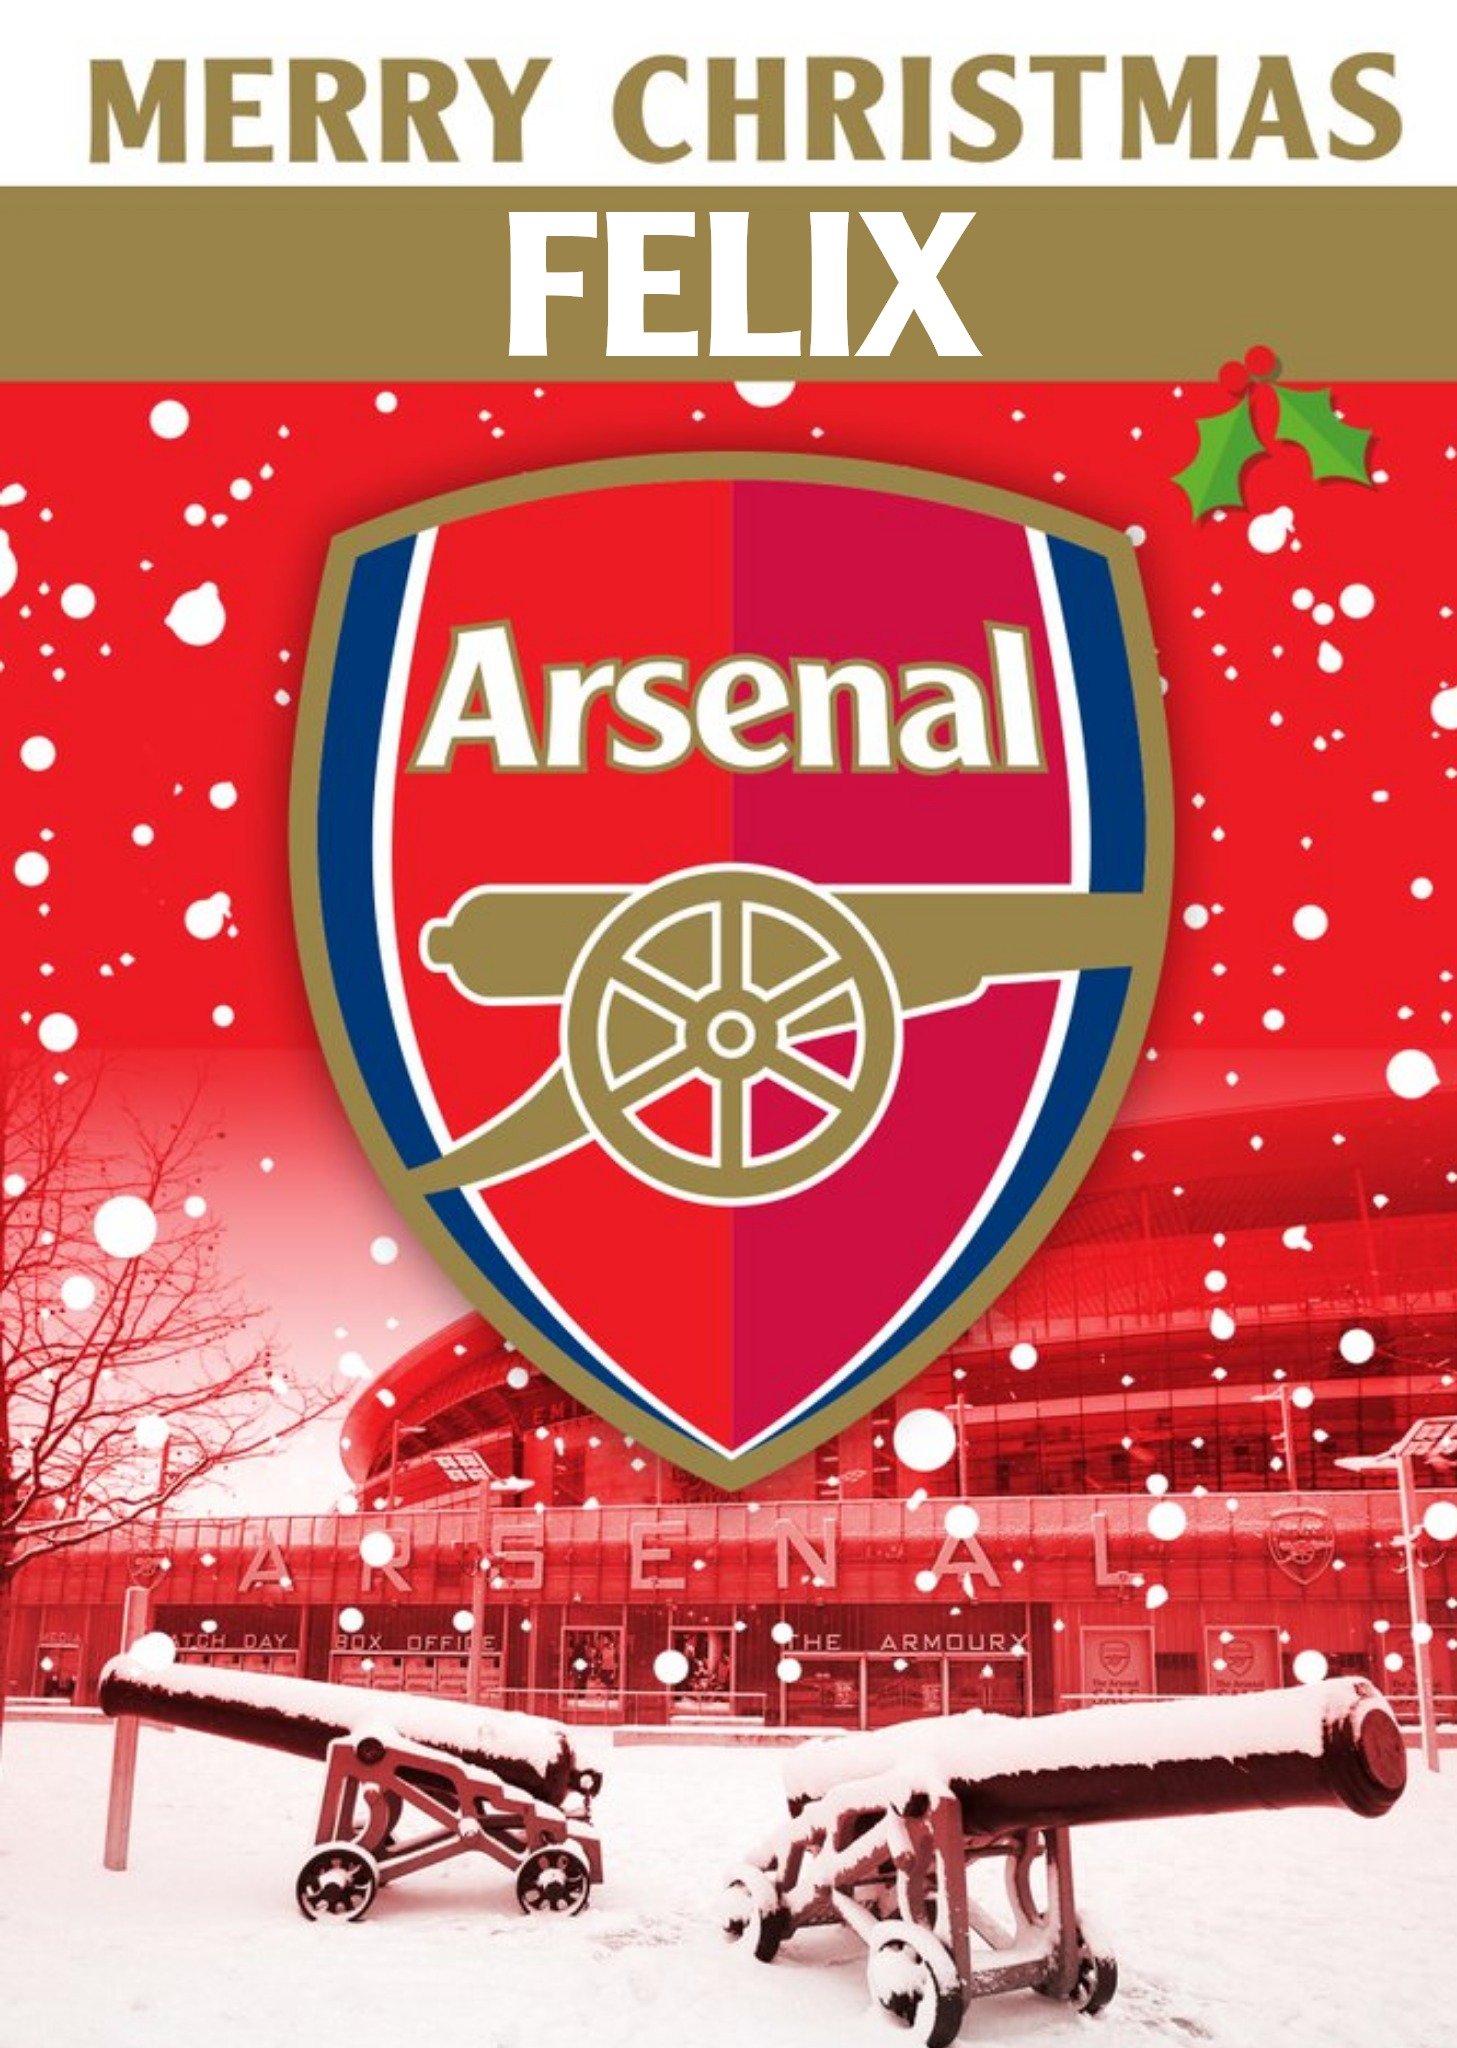 Arsenal Fc Football Club Christmas Card, Large